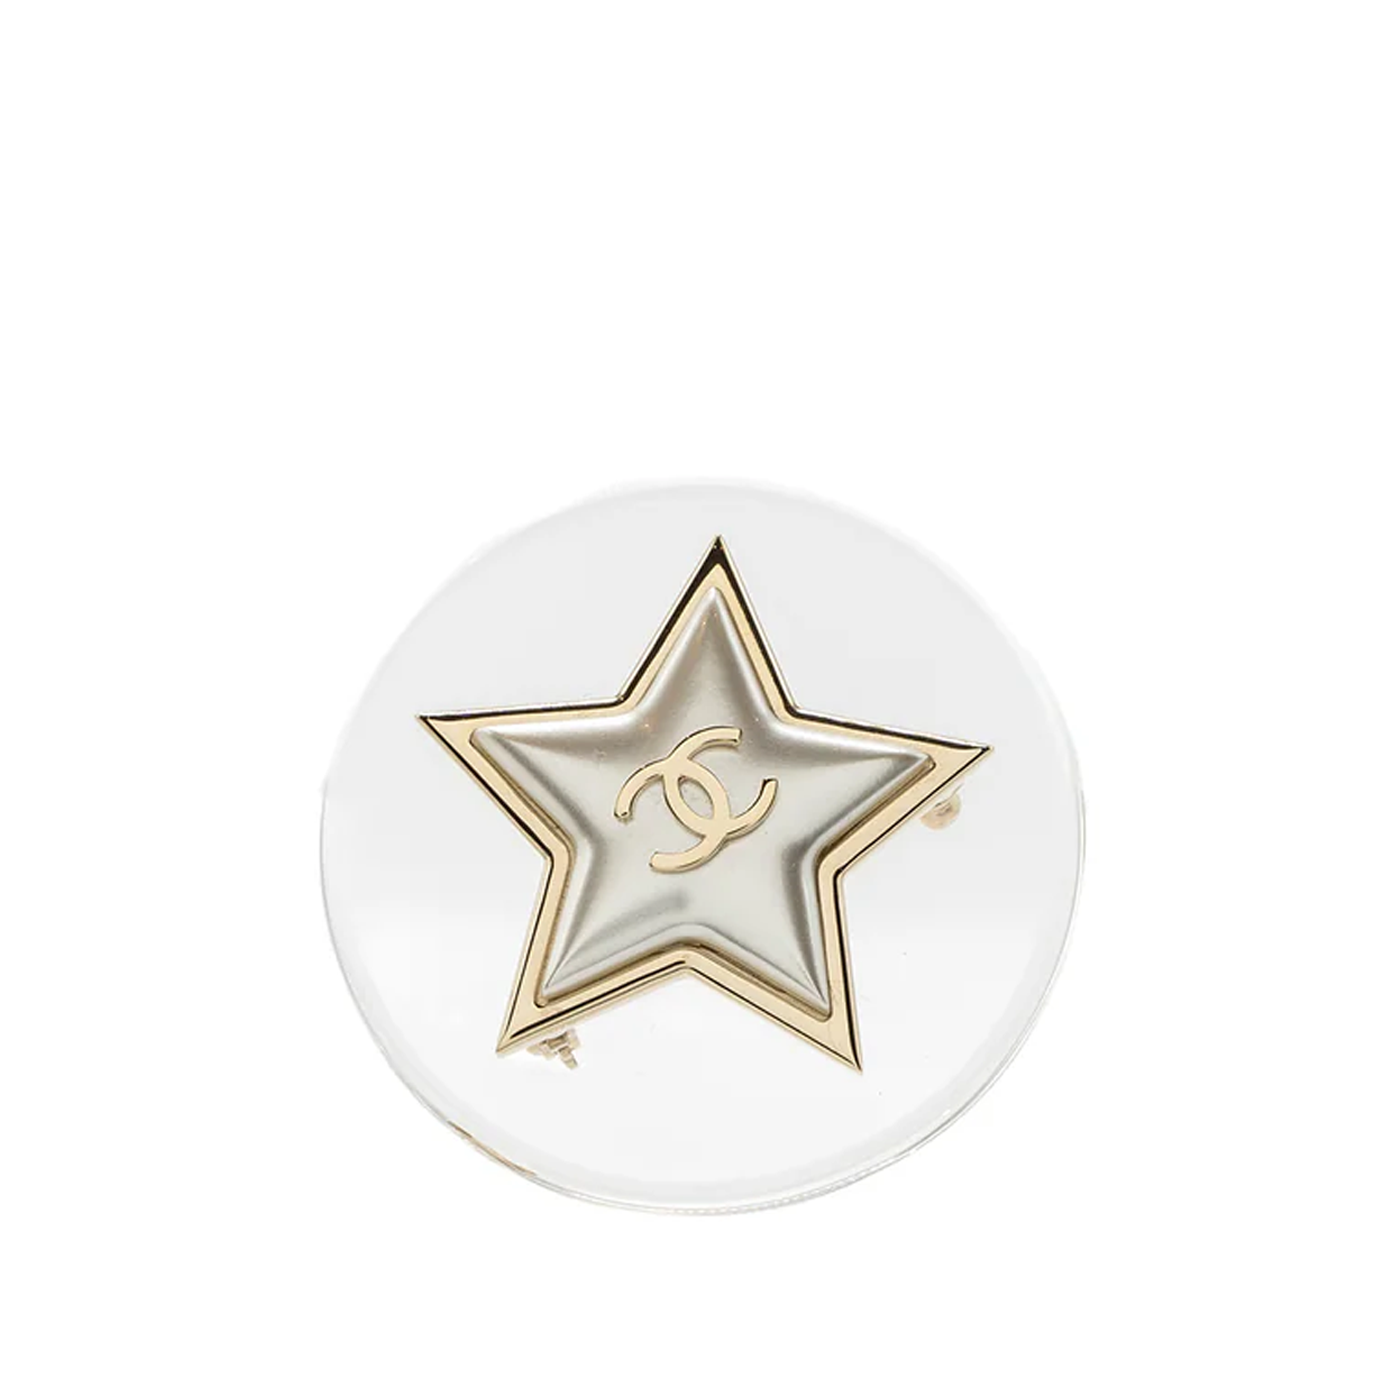 Chanel CC Star Brooch in Light Gold